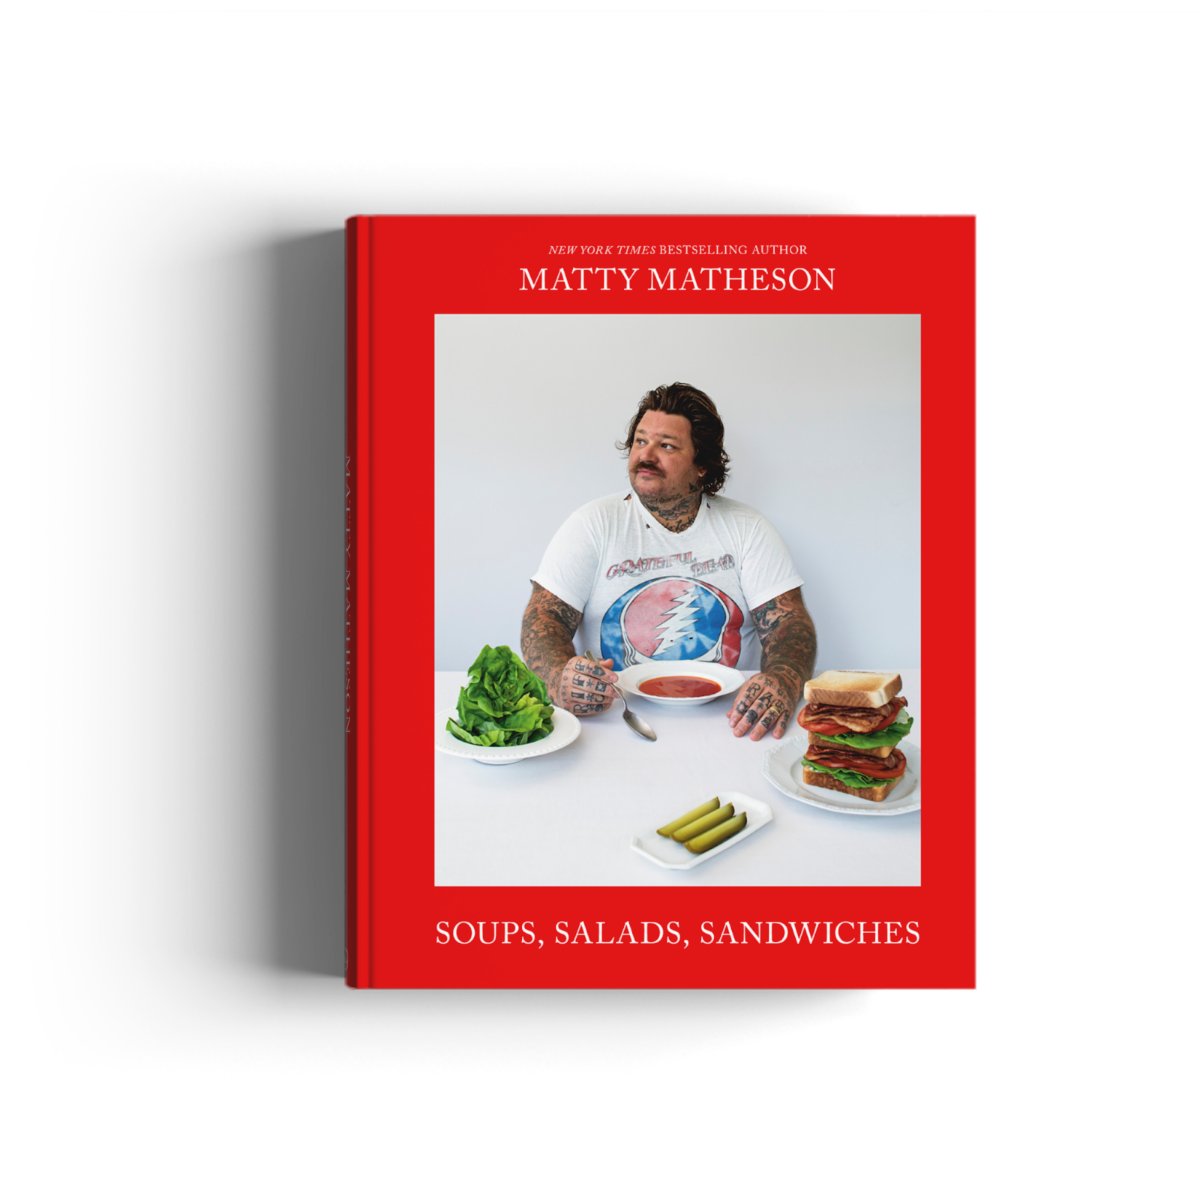 Matty Matheson shares arrival date of forthcoming cookbook

imprintent.org/matty-matheson…

#IMPRINTent #mattymatheson #food